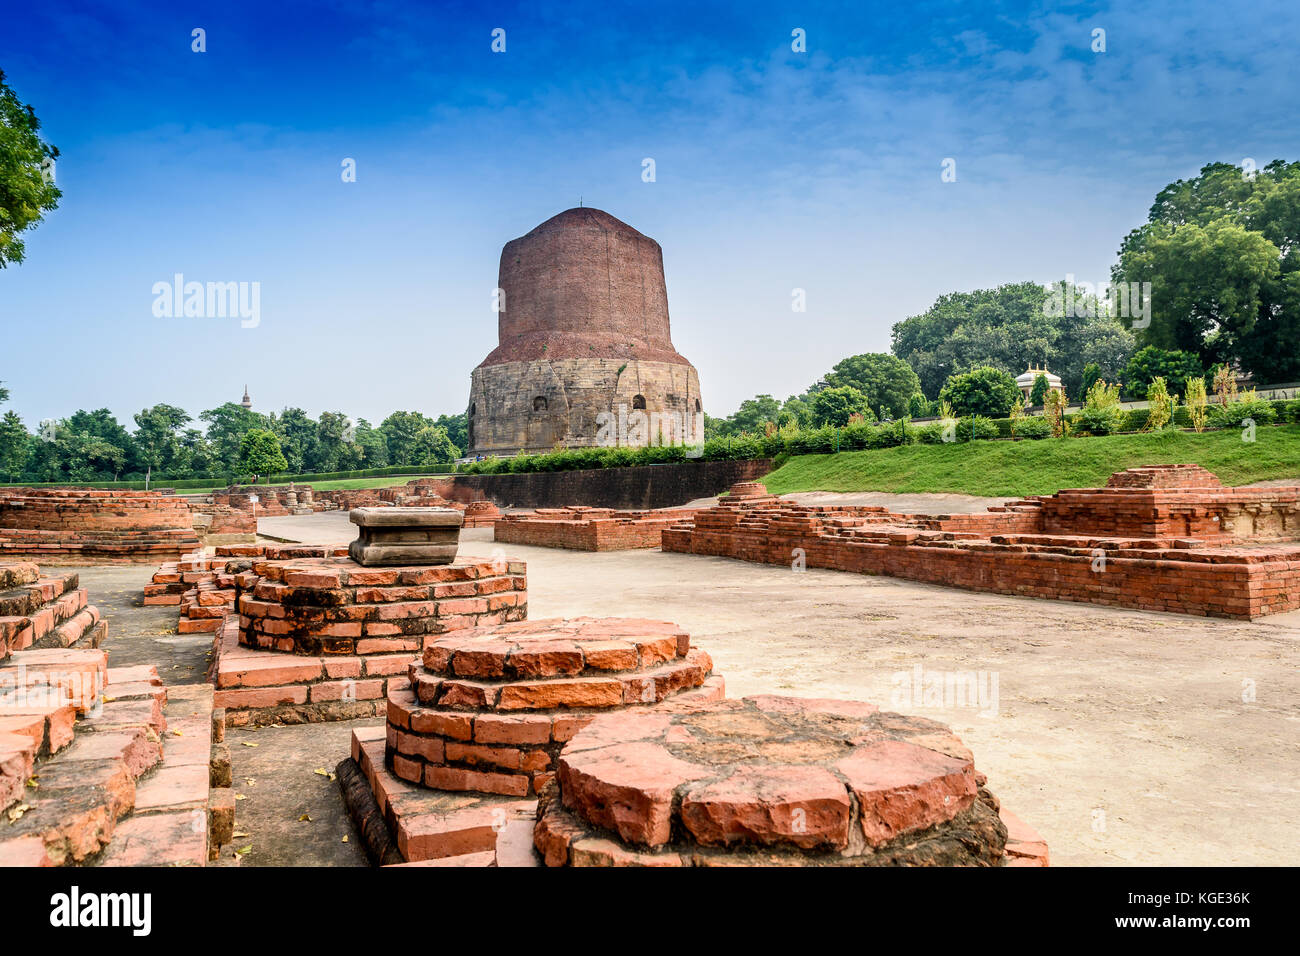 Dhamek Stupa is a massive stupa located at Sarnath, 13 km away from Varanasi in the state of Uttar Pradesh, India. Stupas originated as pre-Buddhist t Stock Photo